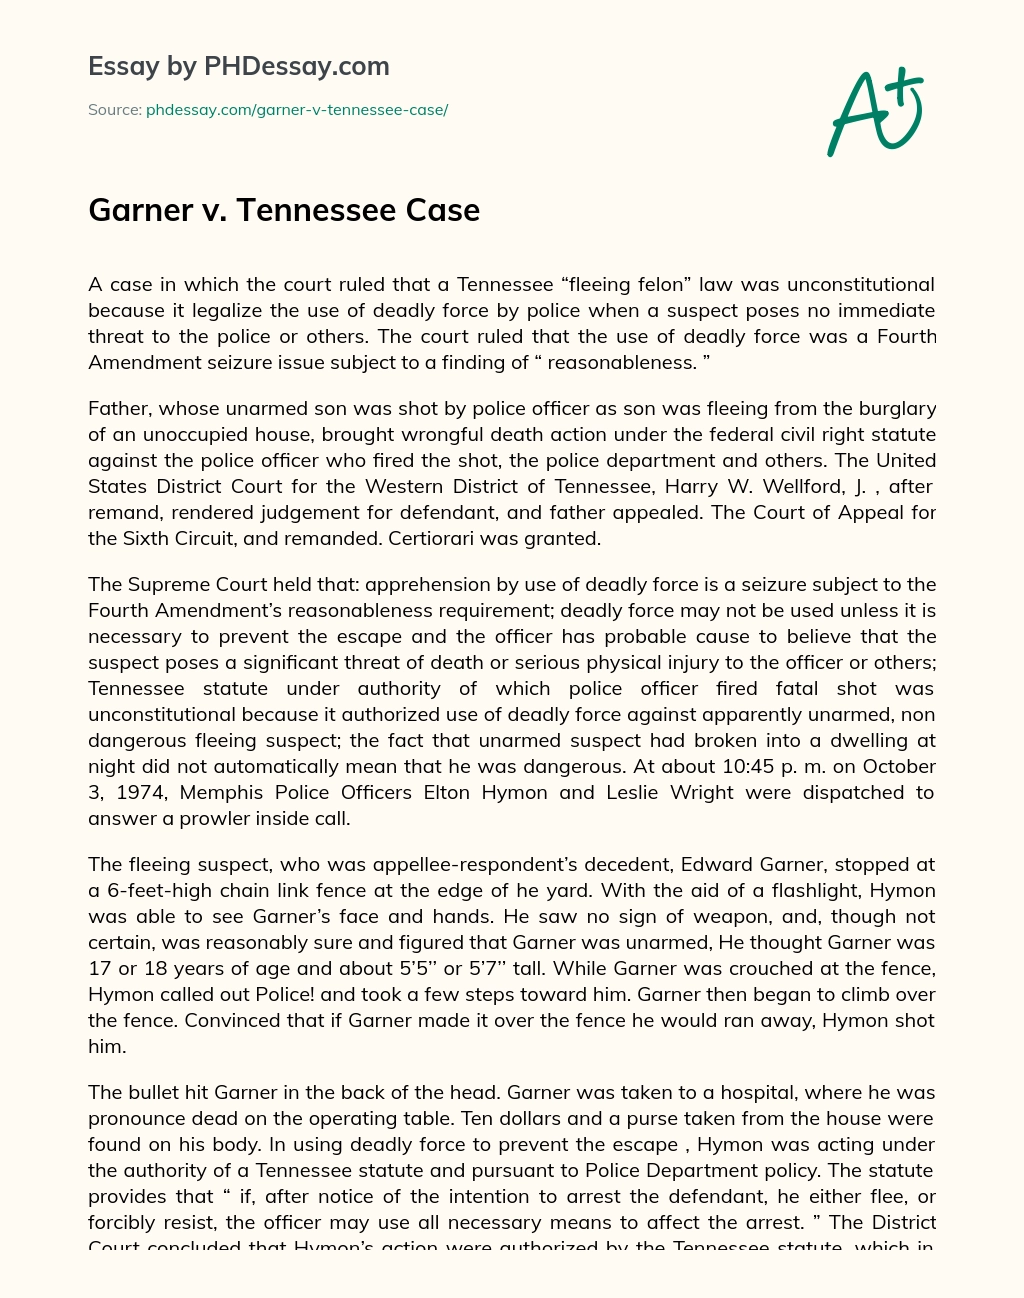 Garner v. Tennessee Case essay